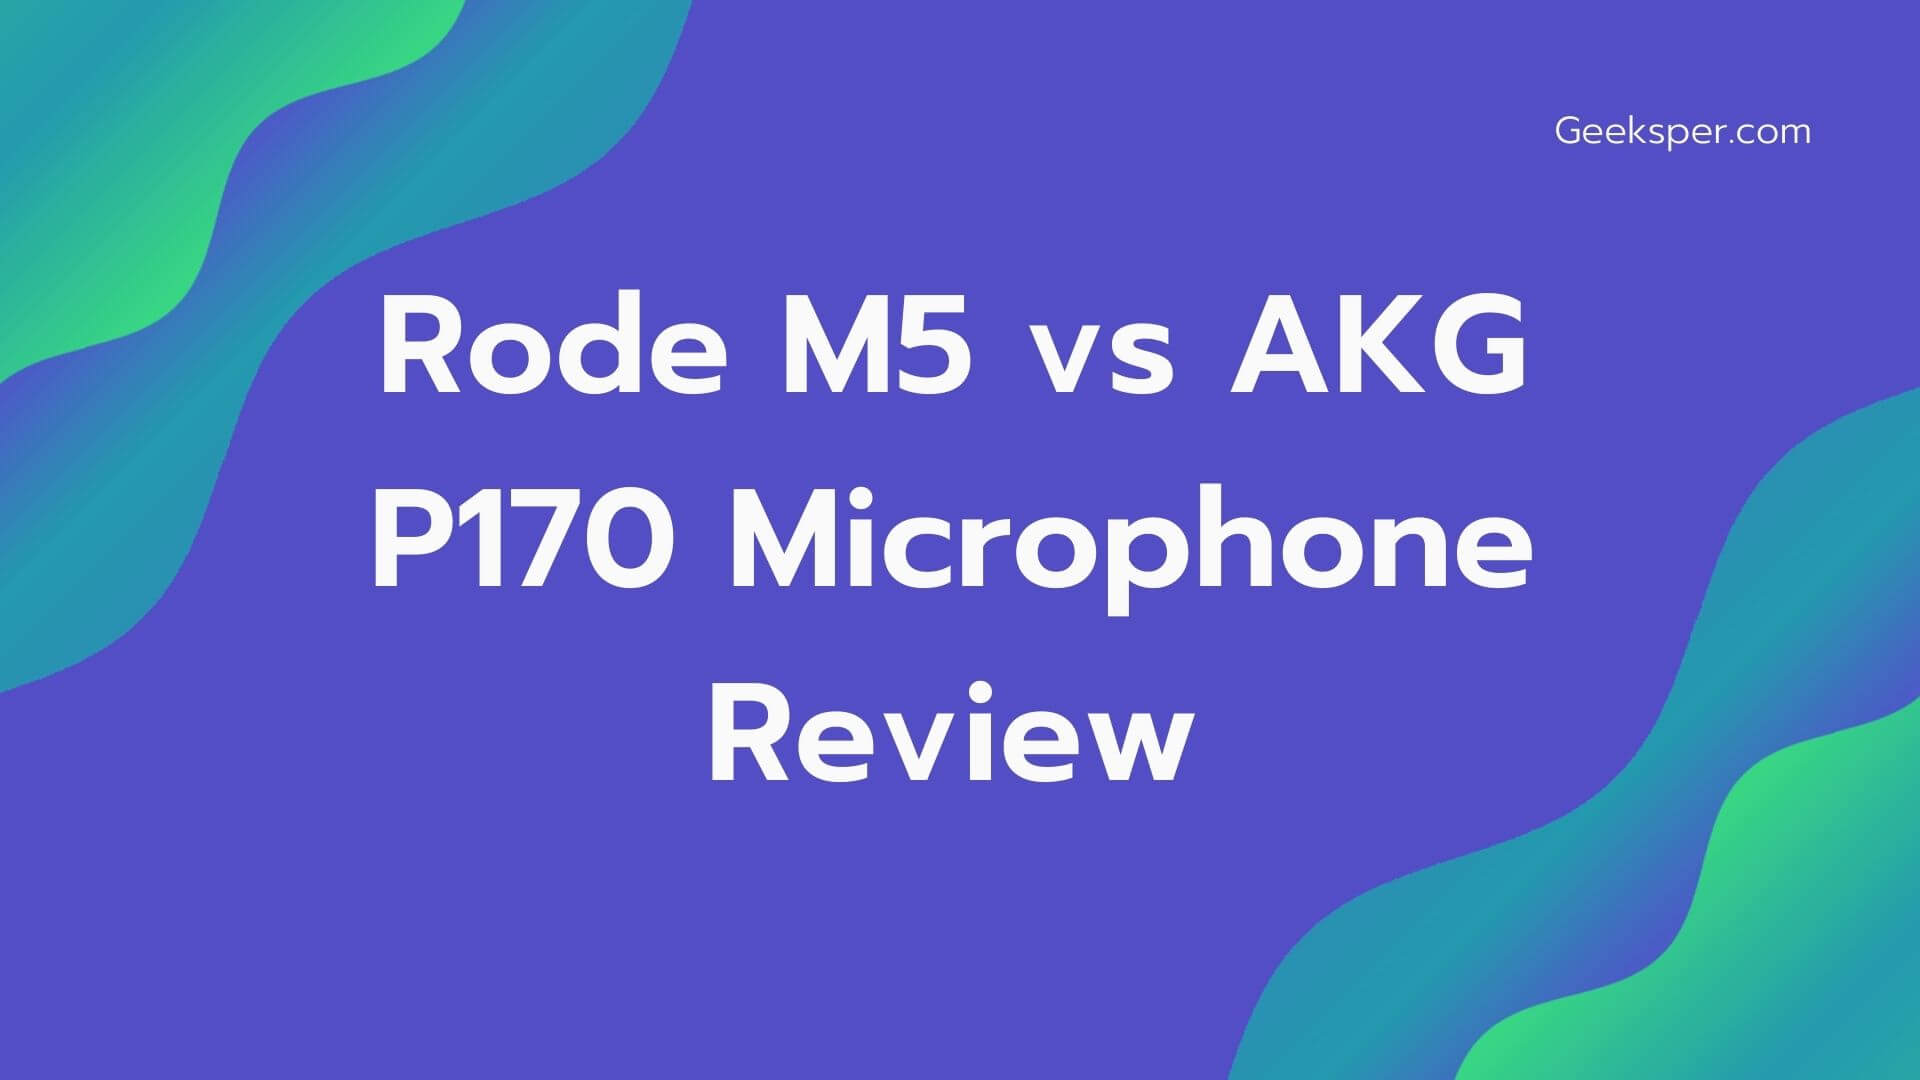 Rode M5 vs AKG P170 Microphone Review